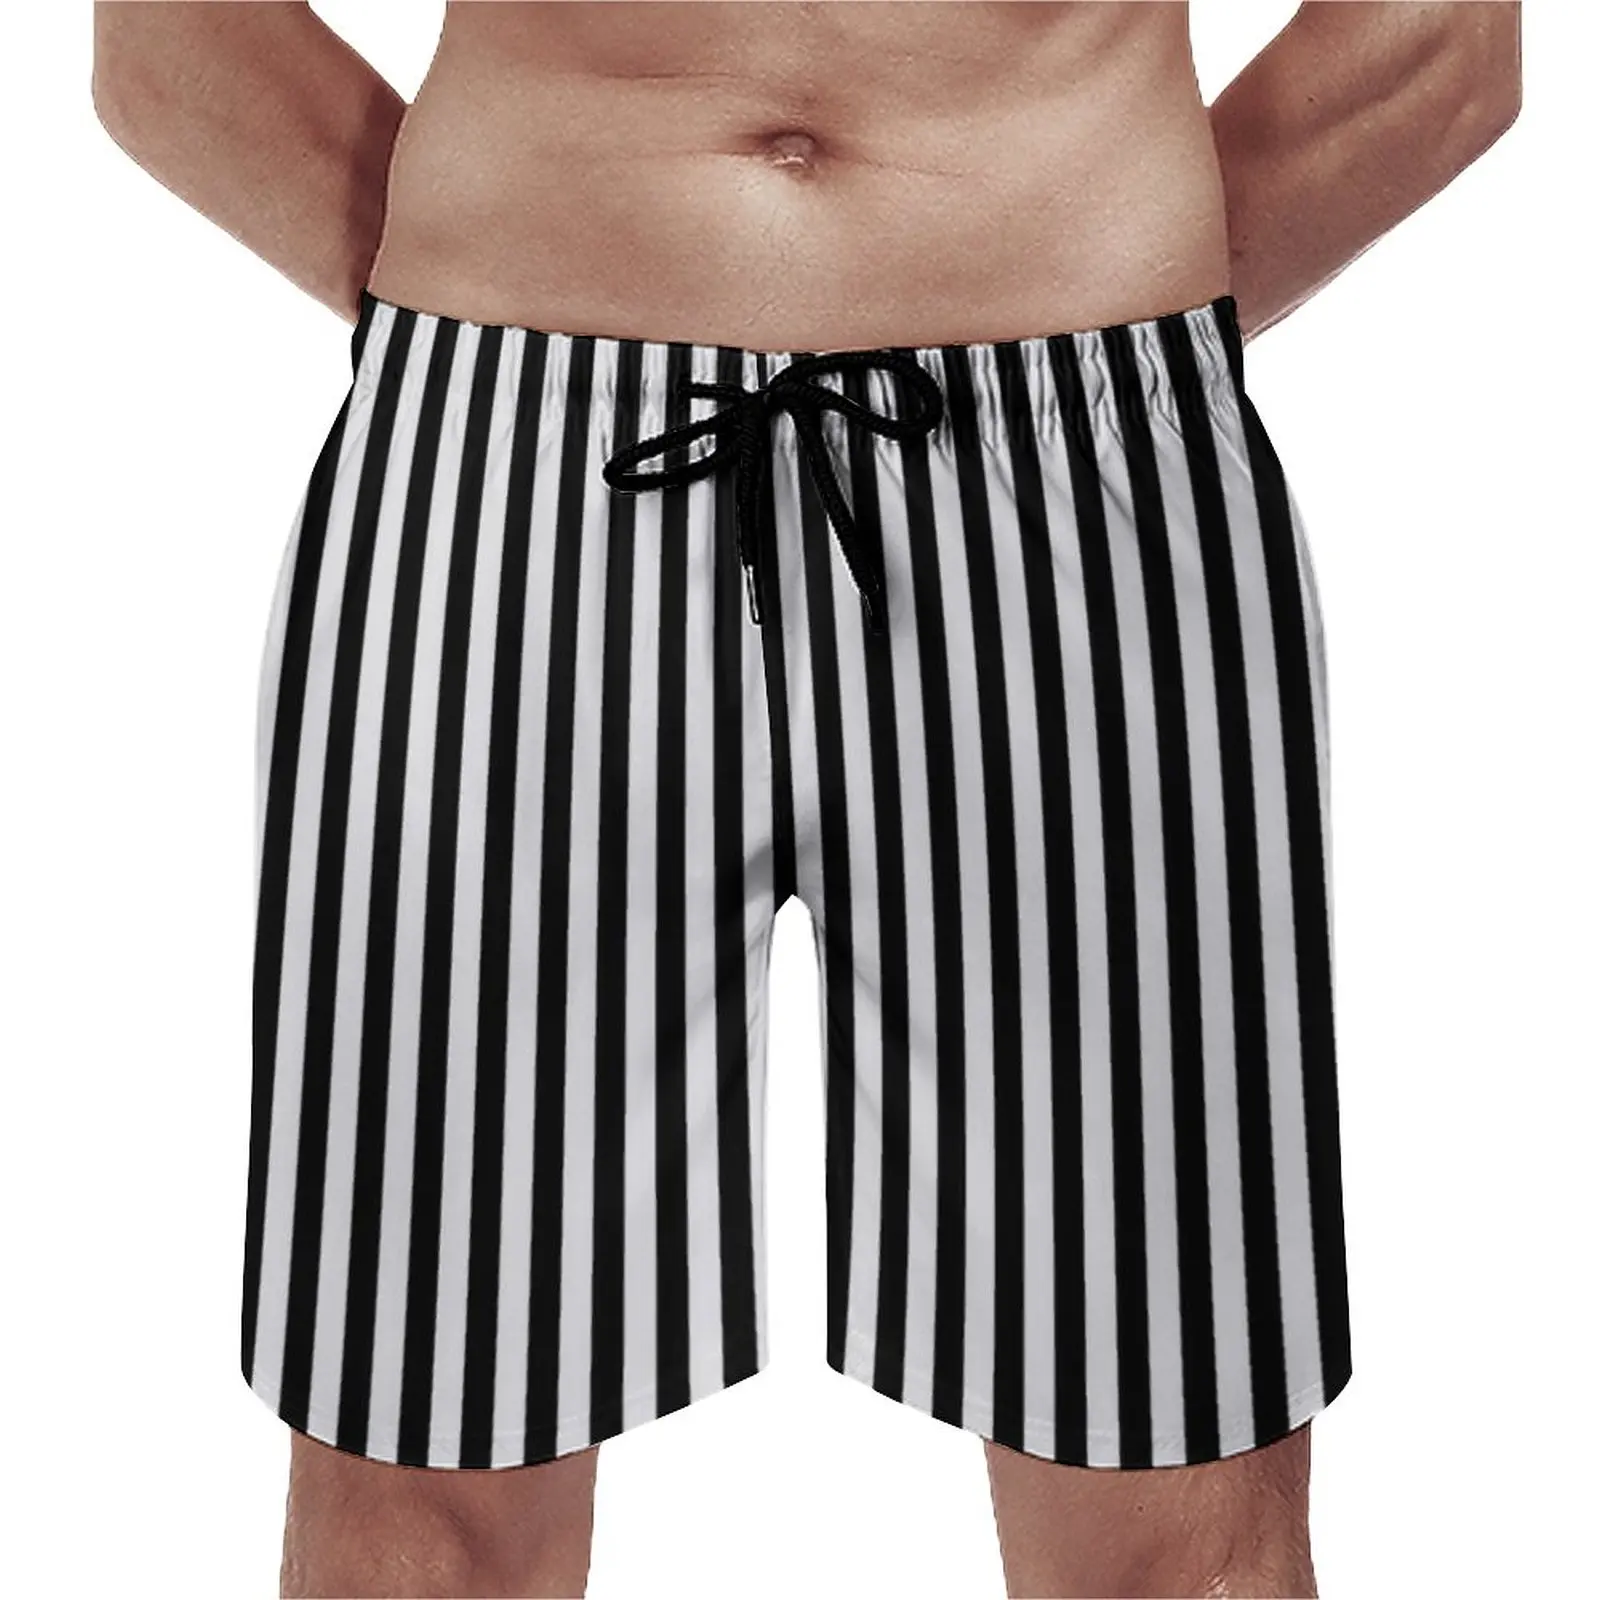 

Black White Striped Board Shorts Vertical Stripes Classic Board Short Pants Males Customs Plus Size Swimming Trunks Gift idea